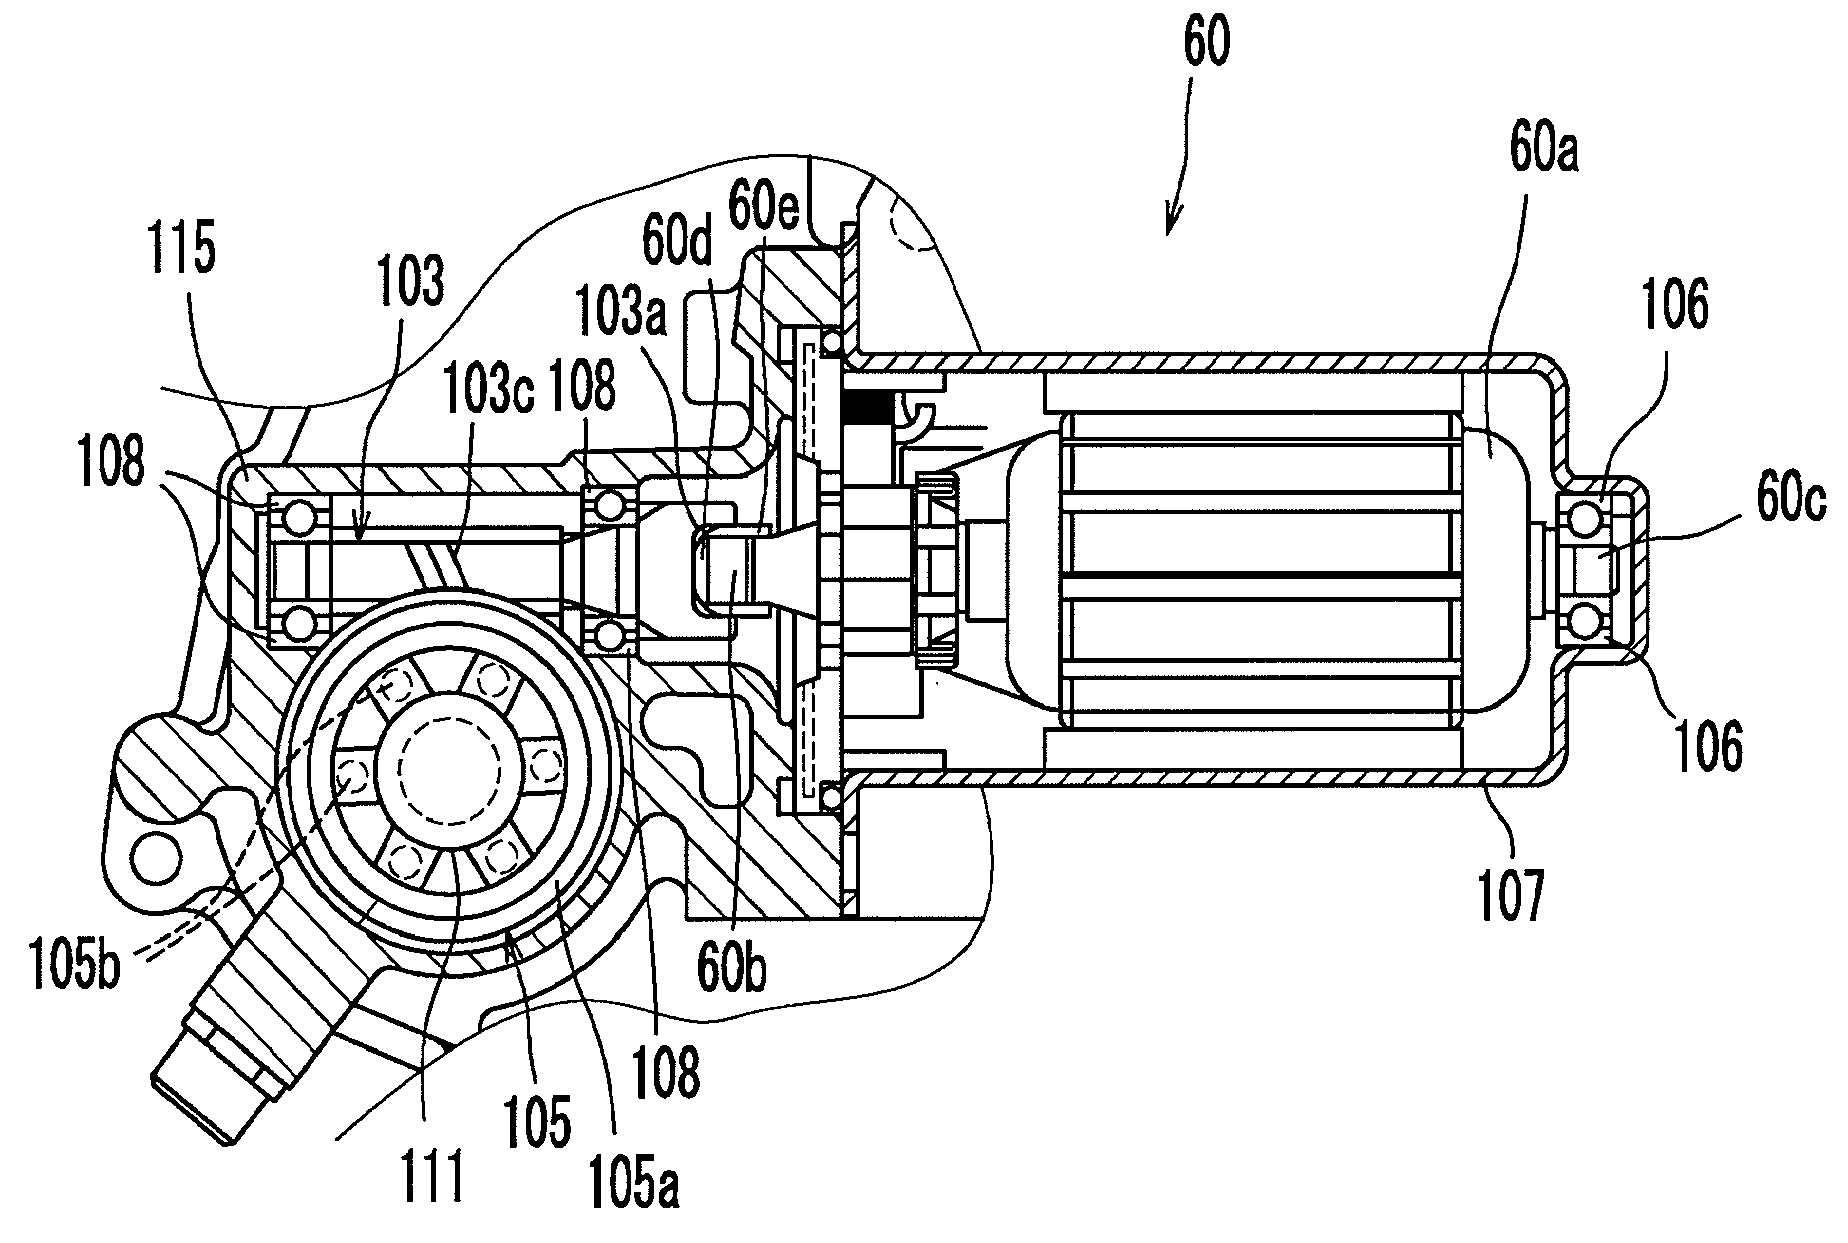 Clutch actuator, engine unit, and saddle type vehicle